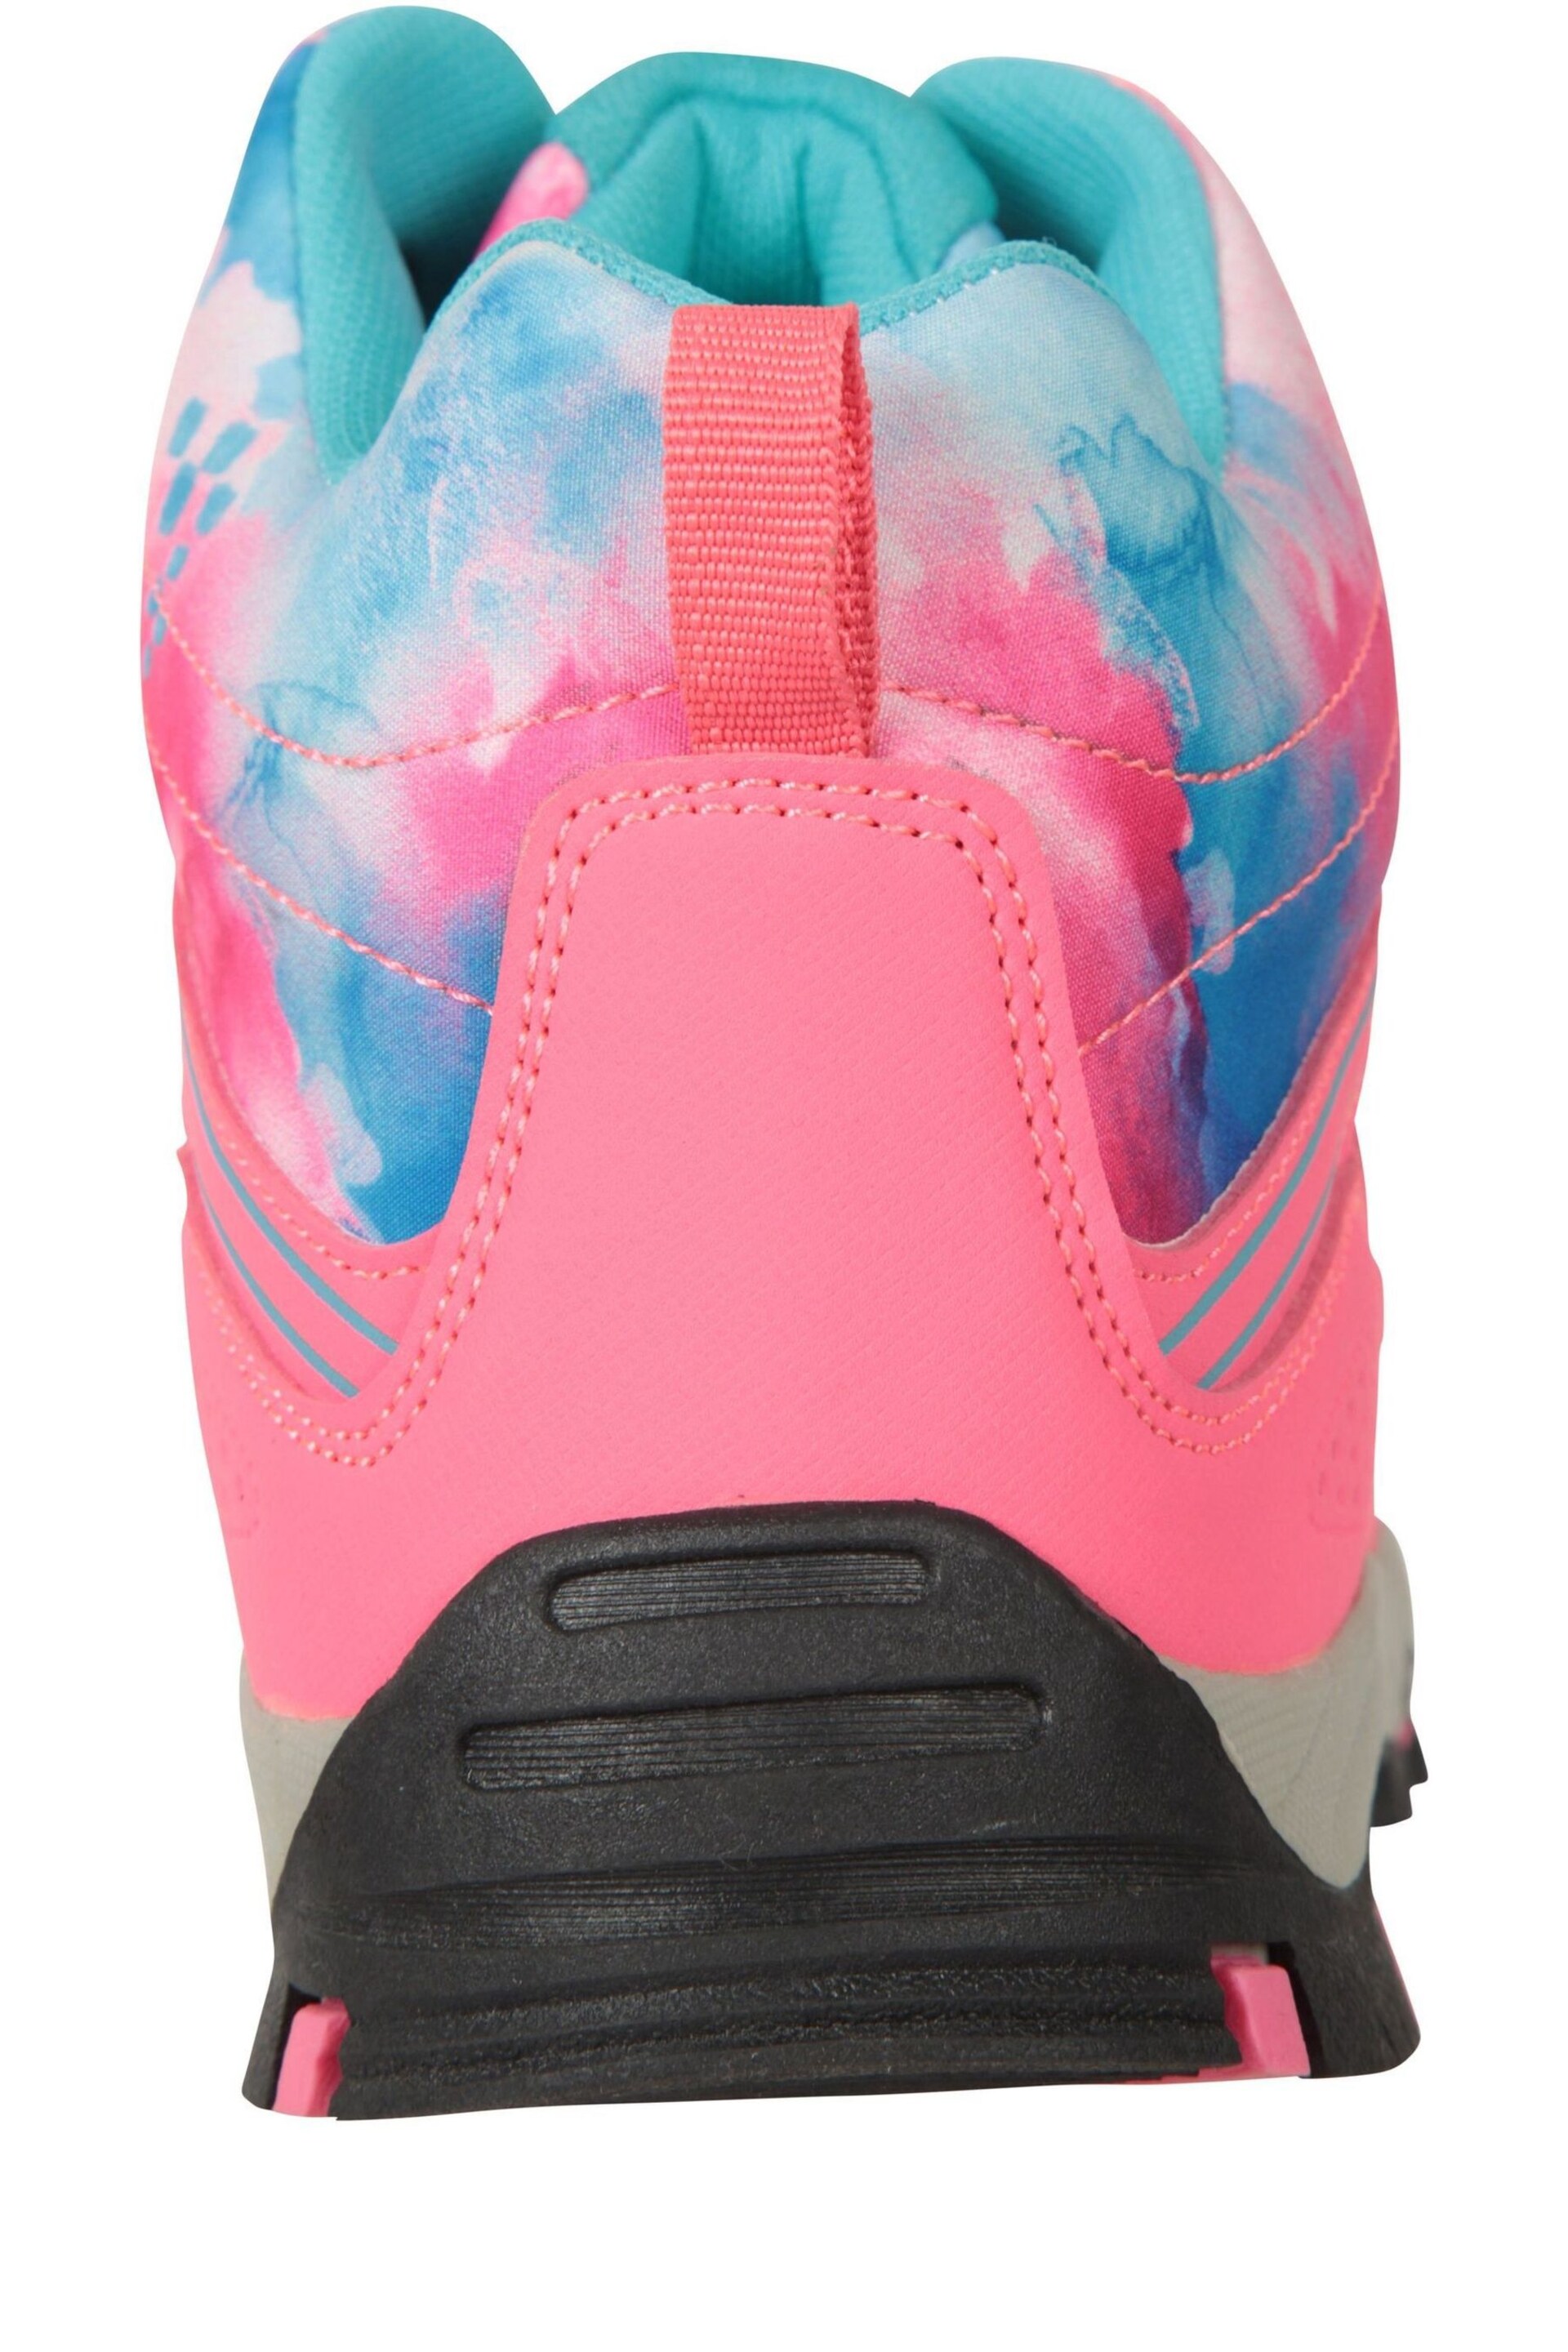 Mountain Warehouse Pink Oscar II Kids Walking Boots - Image 5 of 6